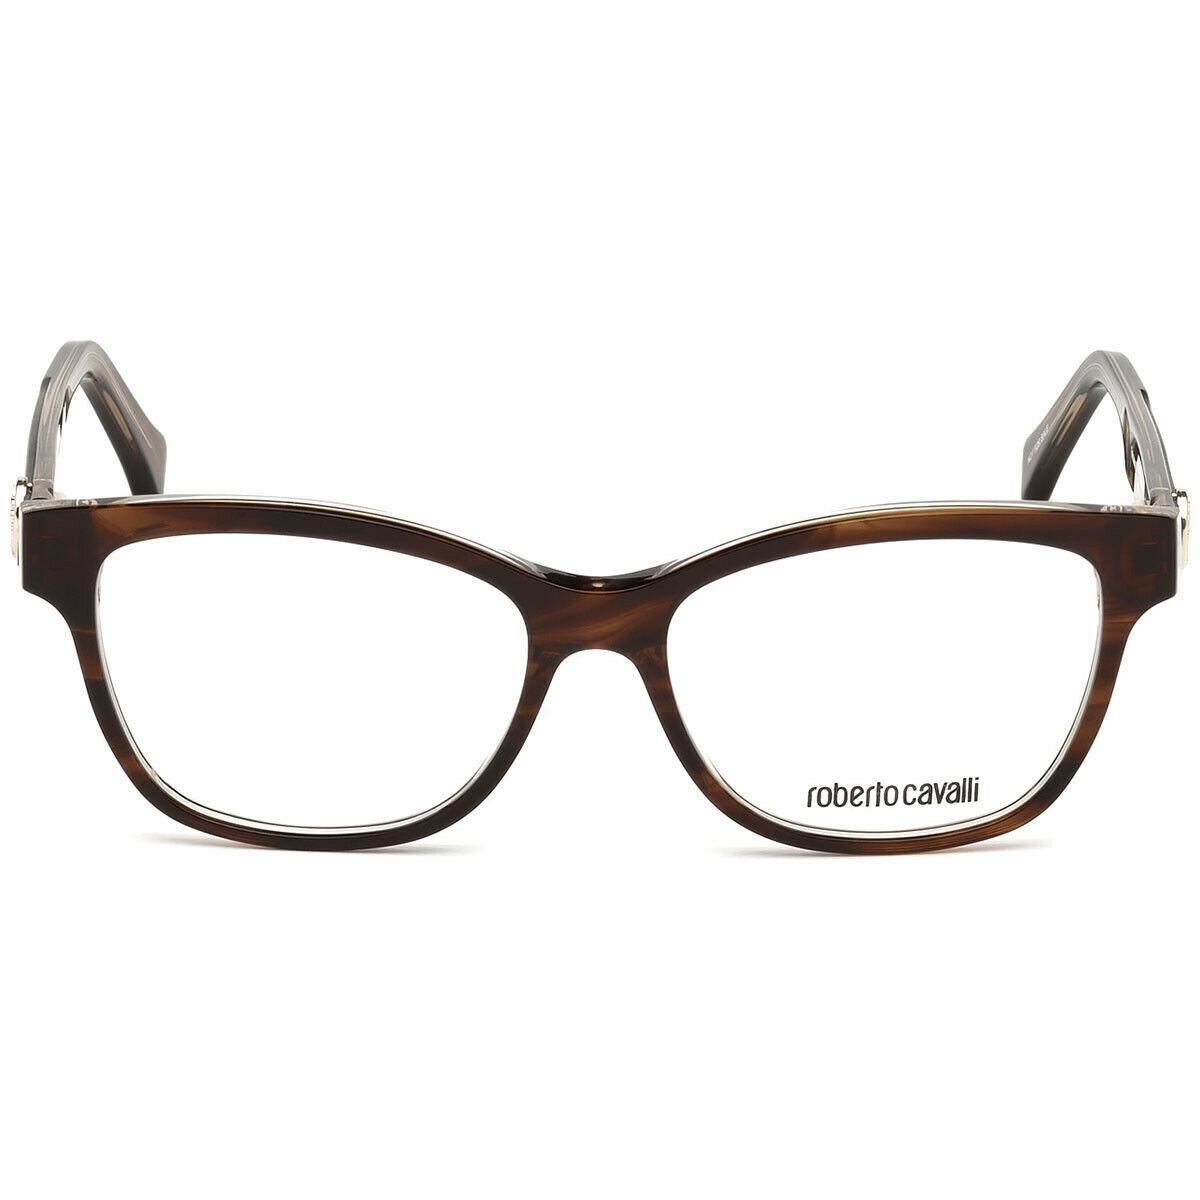 Roberto Cavalli Fivizzano 5050 Brown A56 Plastic Eyeglasses Frame 53-15-140